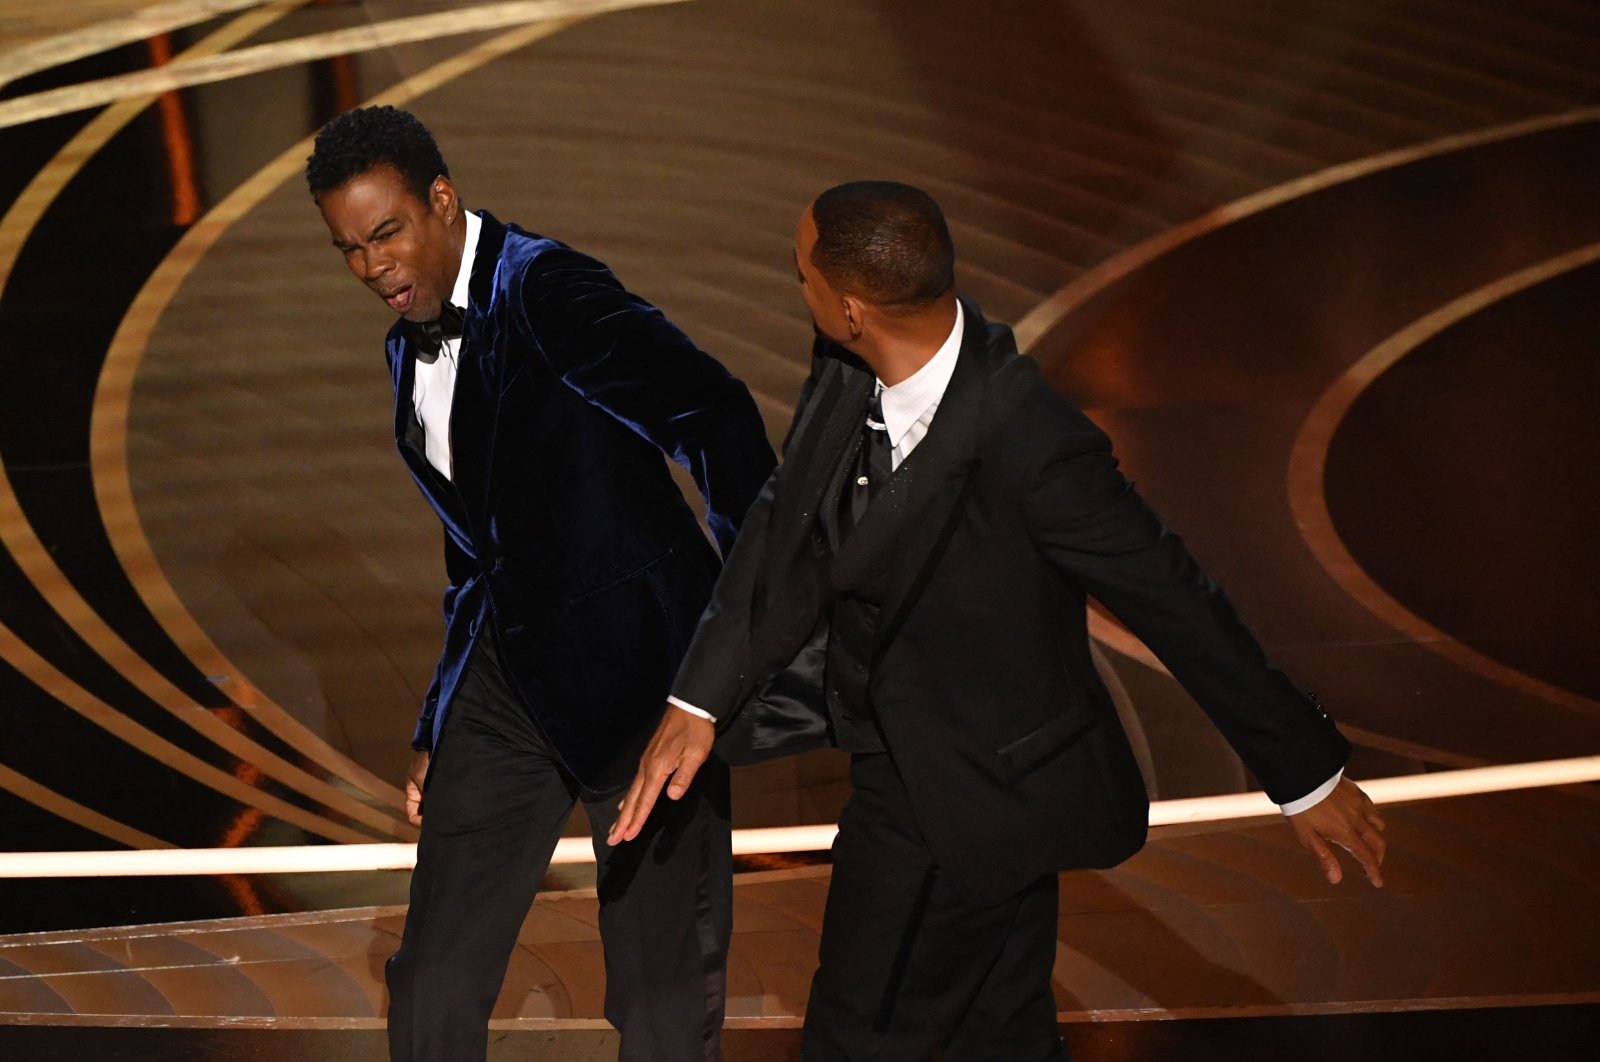 Will Smith meminta maaf kepada Chris Rock untuk tamparan Oscar lagi